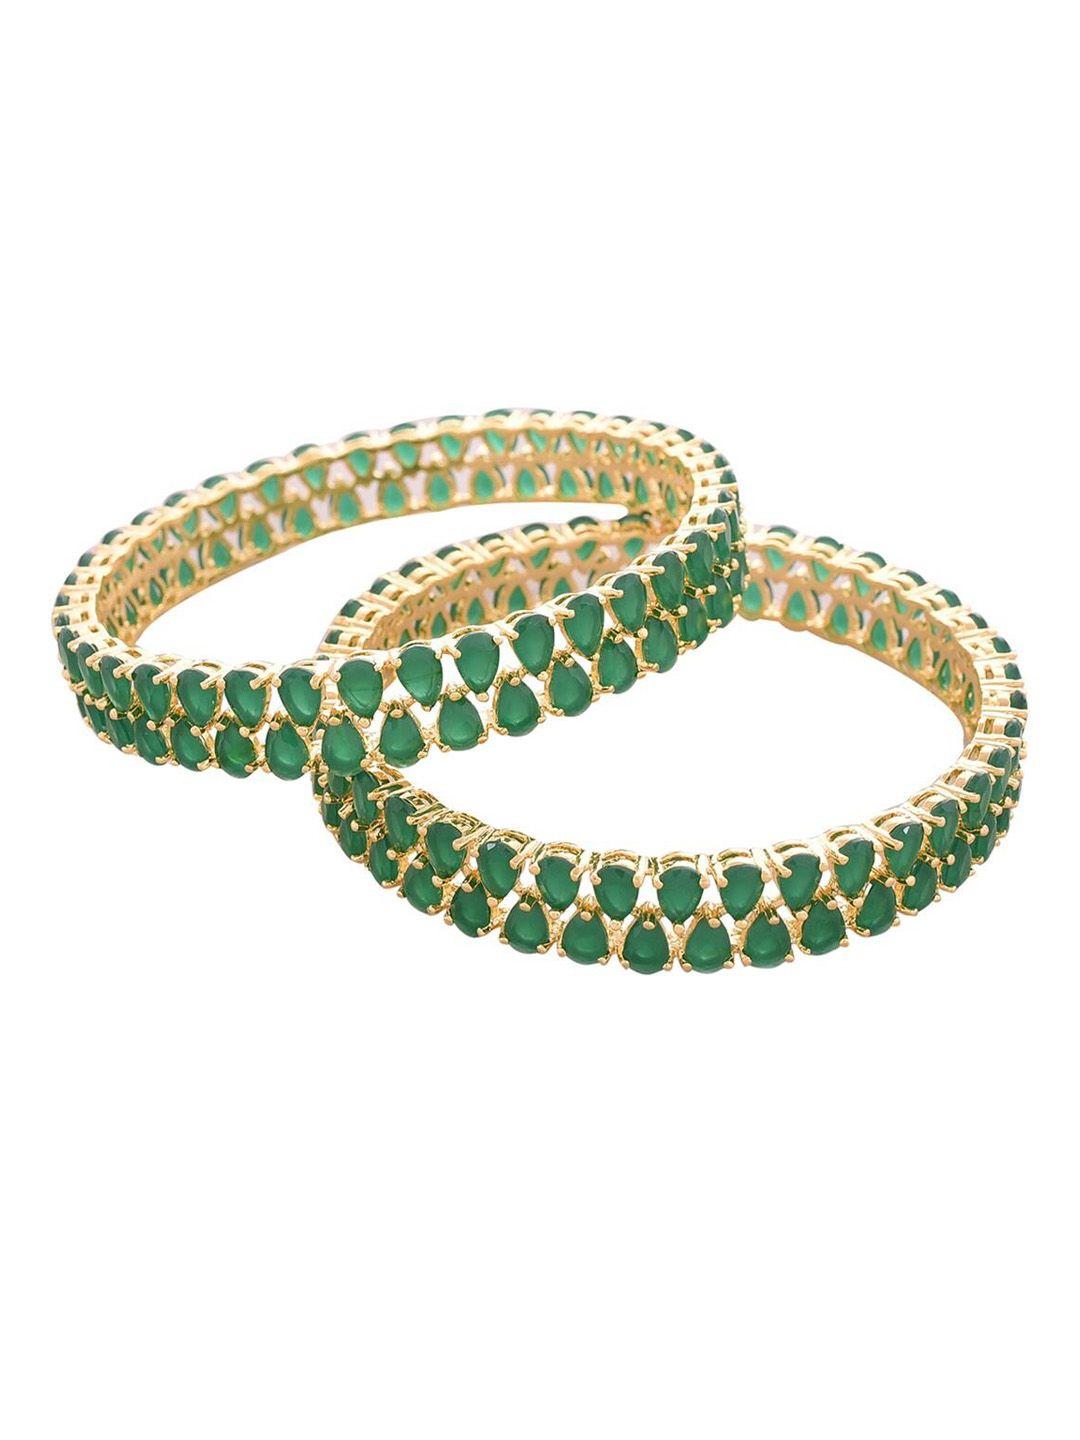 ratnavali jewels set of 2 gold-plated american diamond studded bangles